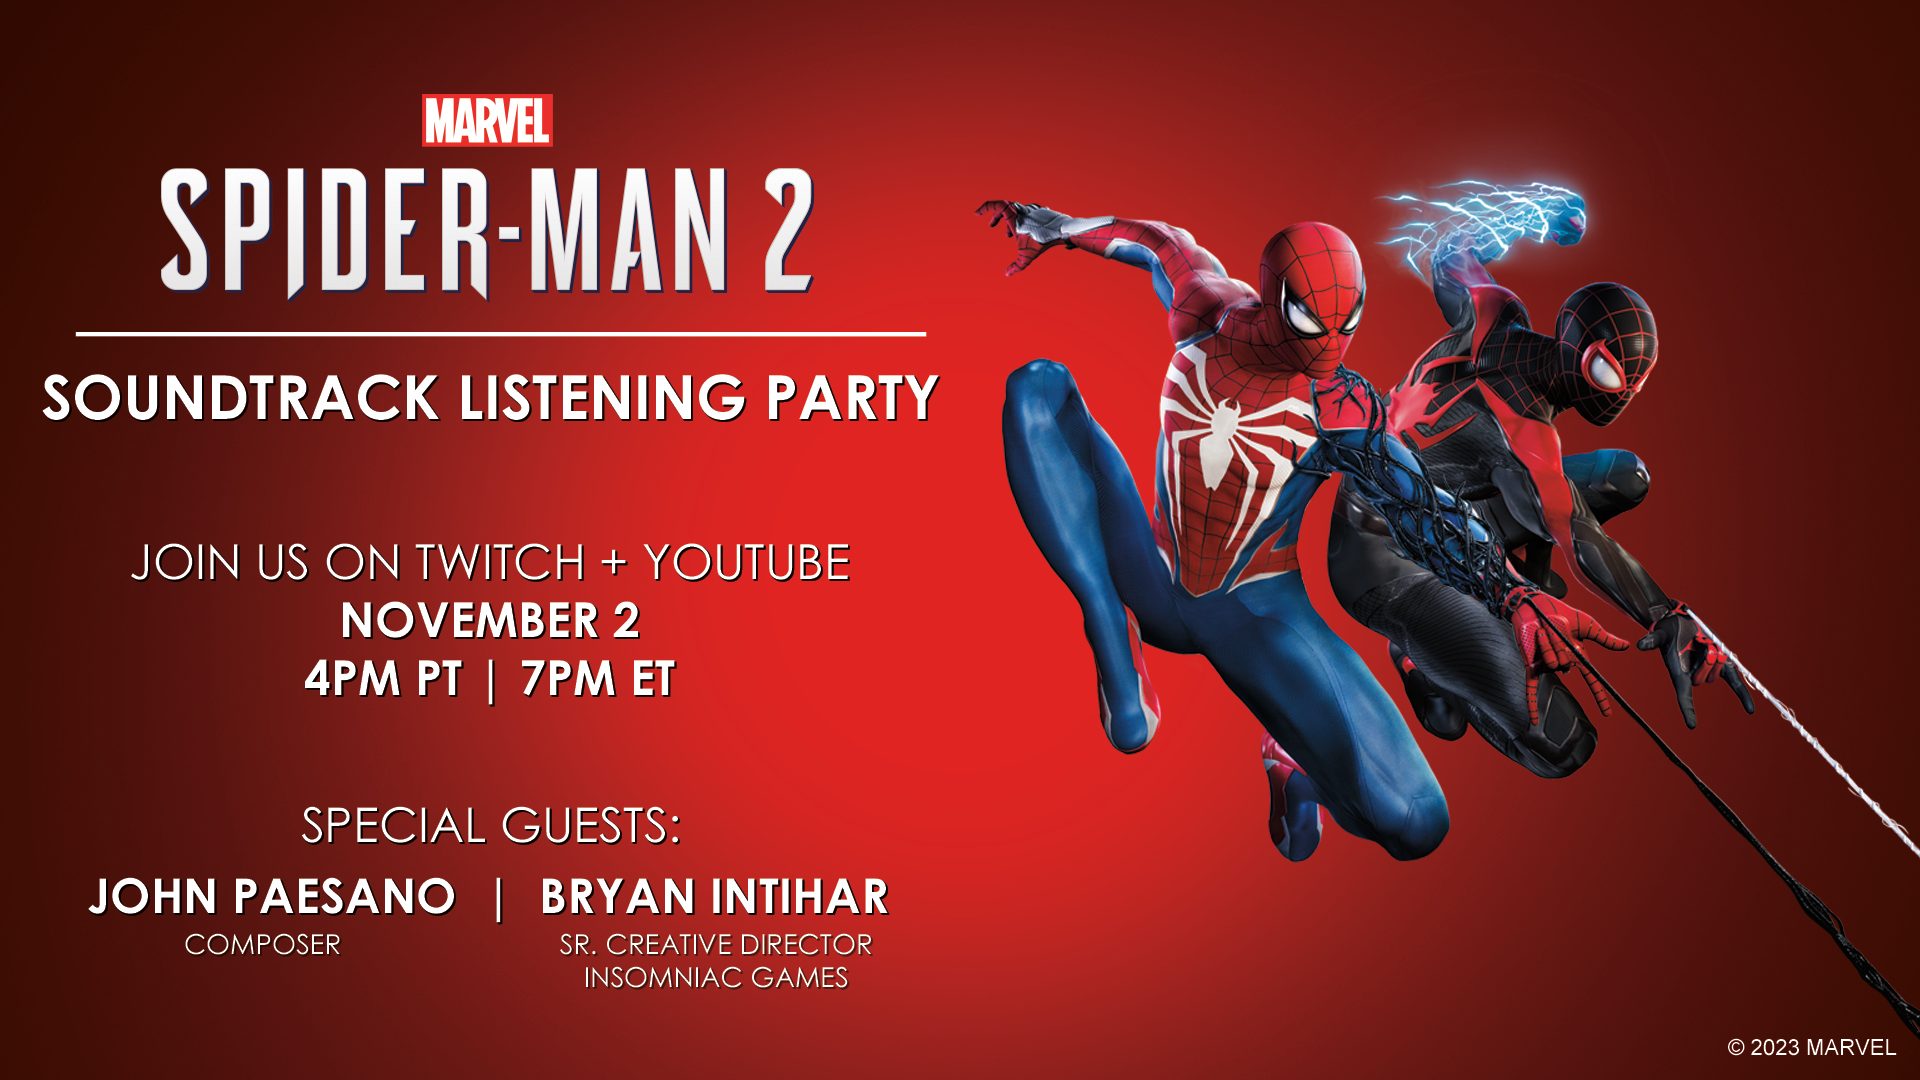 Marvel’s Spider-Man 2 Soundtrack Listening Party streaming Nov 2 – PlayStation.Blog